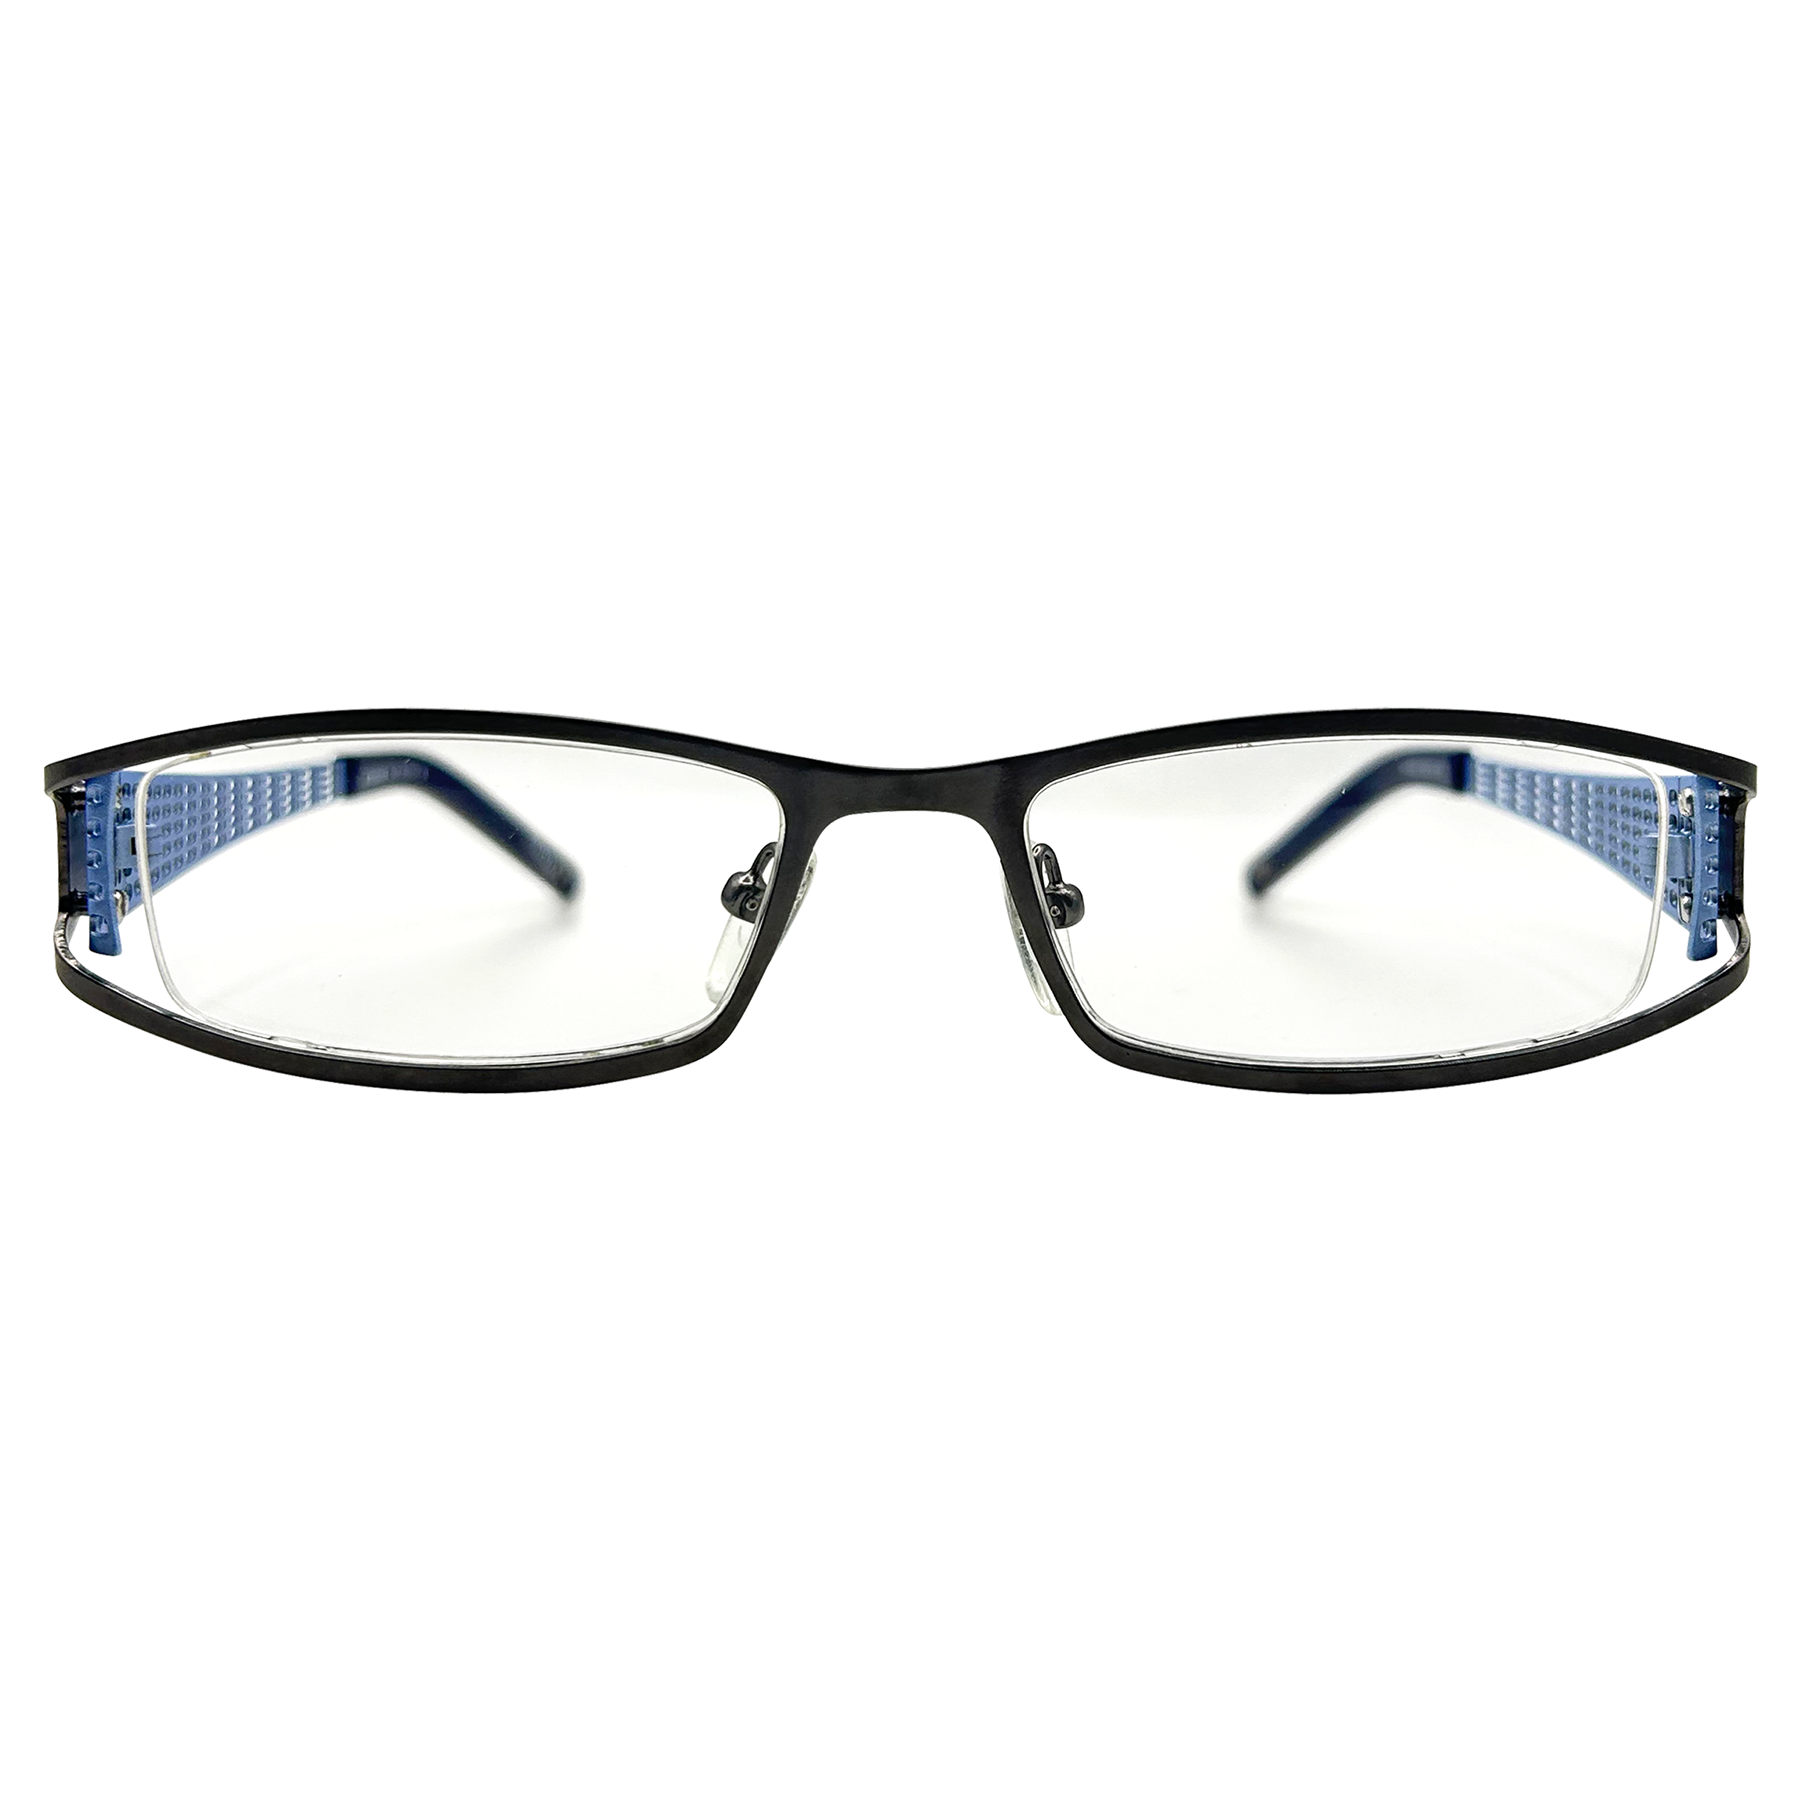 square clear glasses